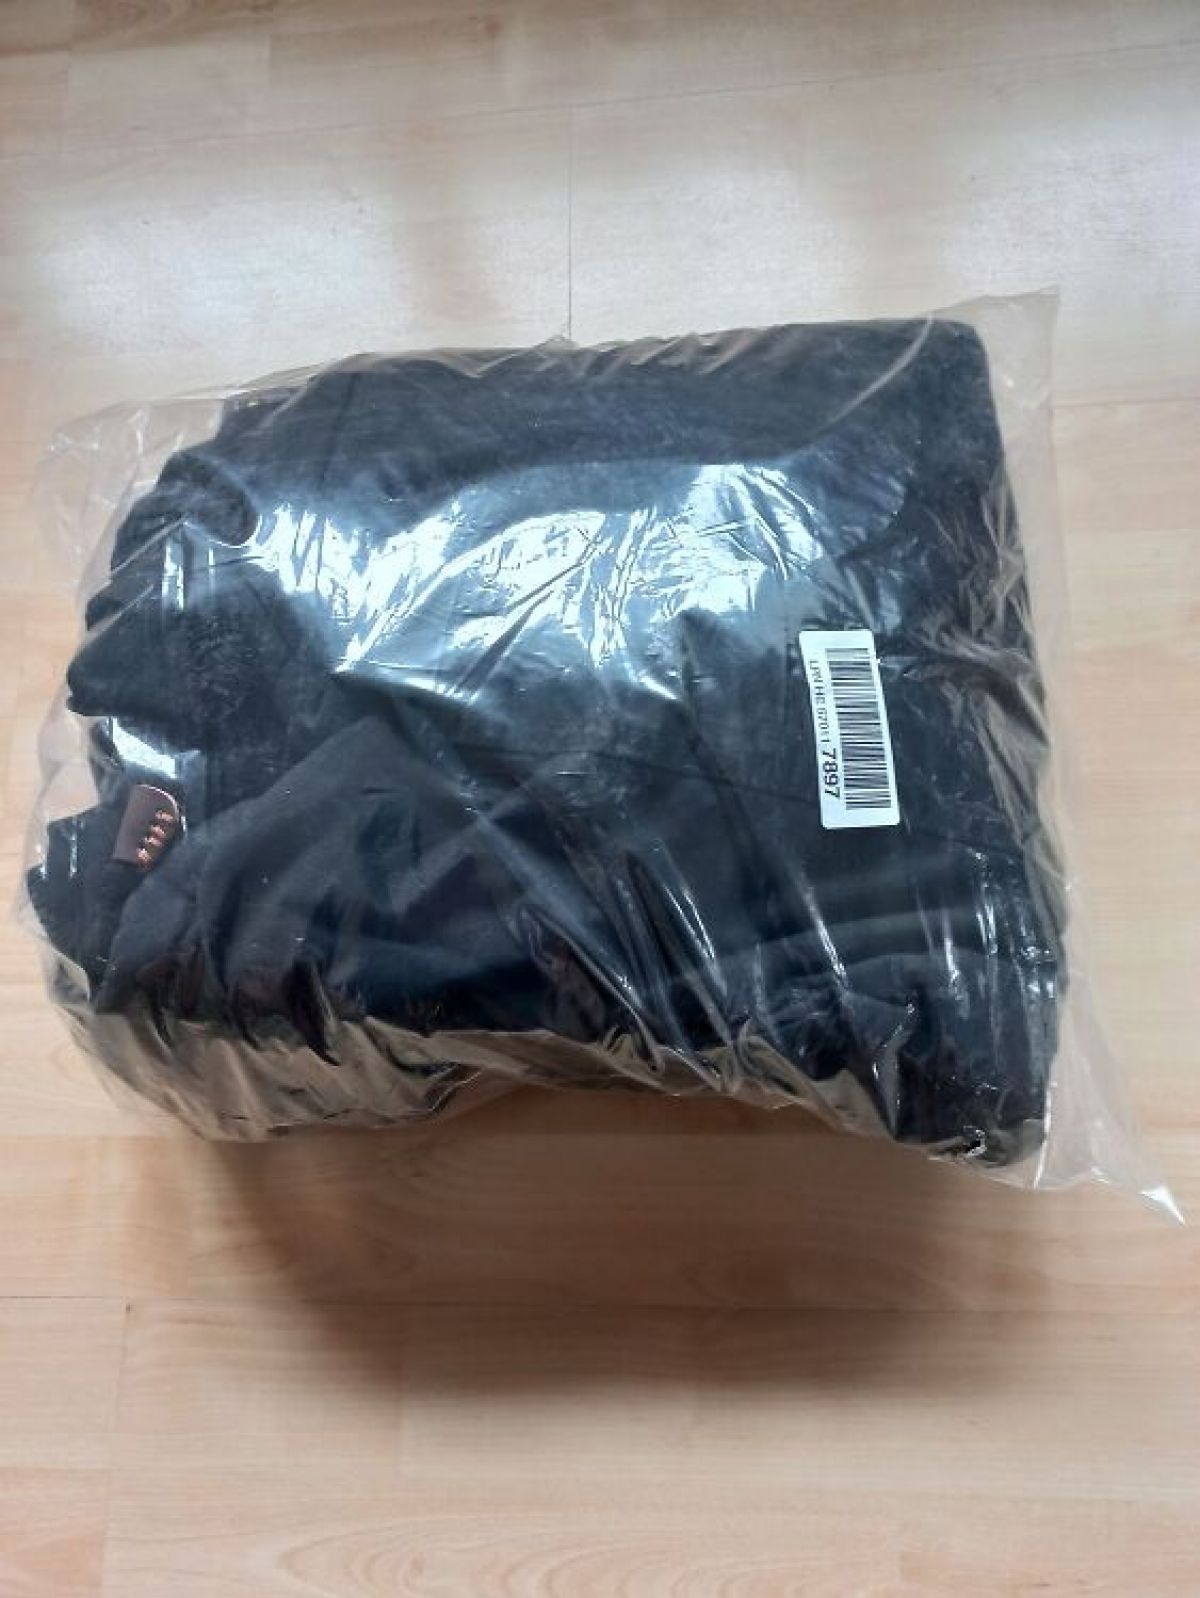 Men’s winter jacket, Kefitevd, Size L, black